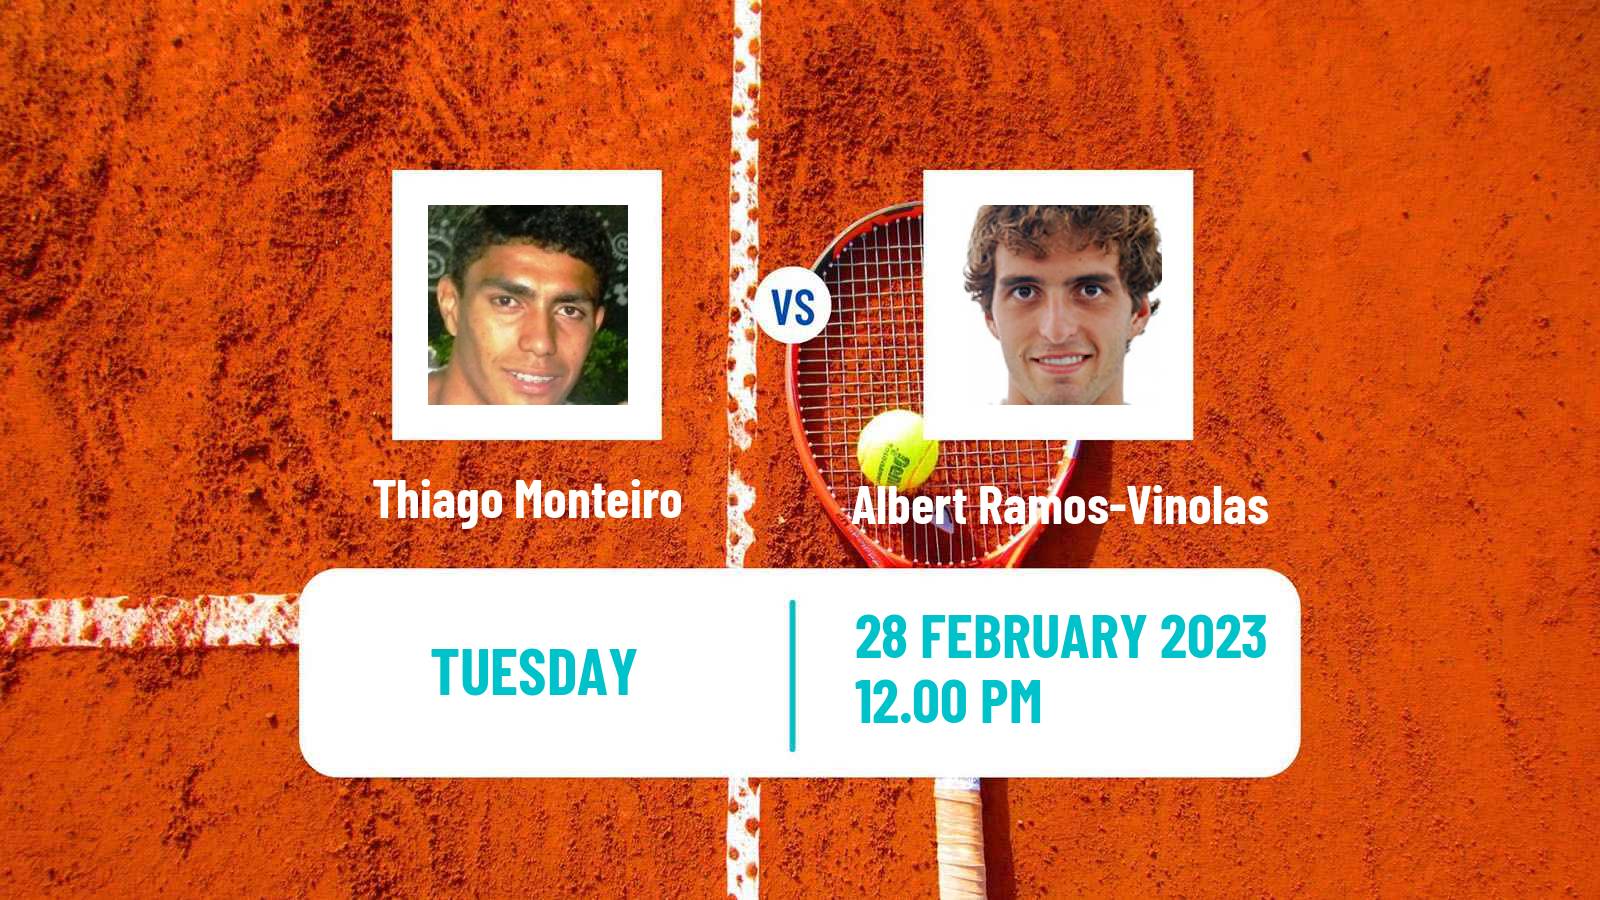 Tennis ATP Santiago Thiago Monteiro - Albert Ramos-Vinolas